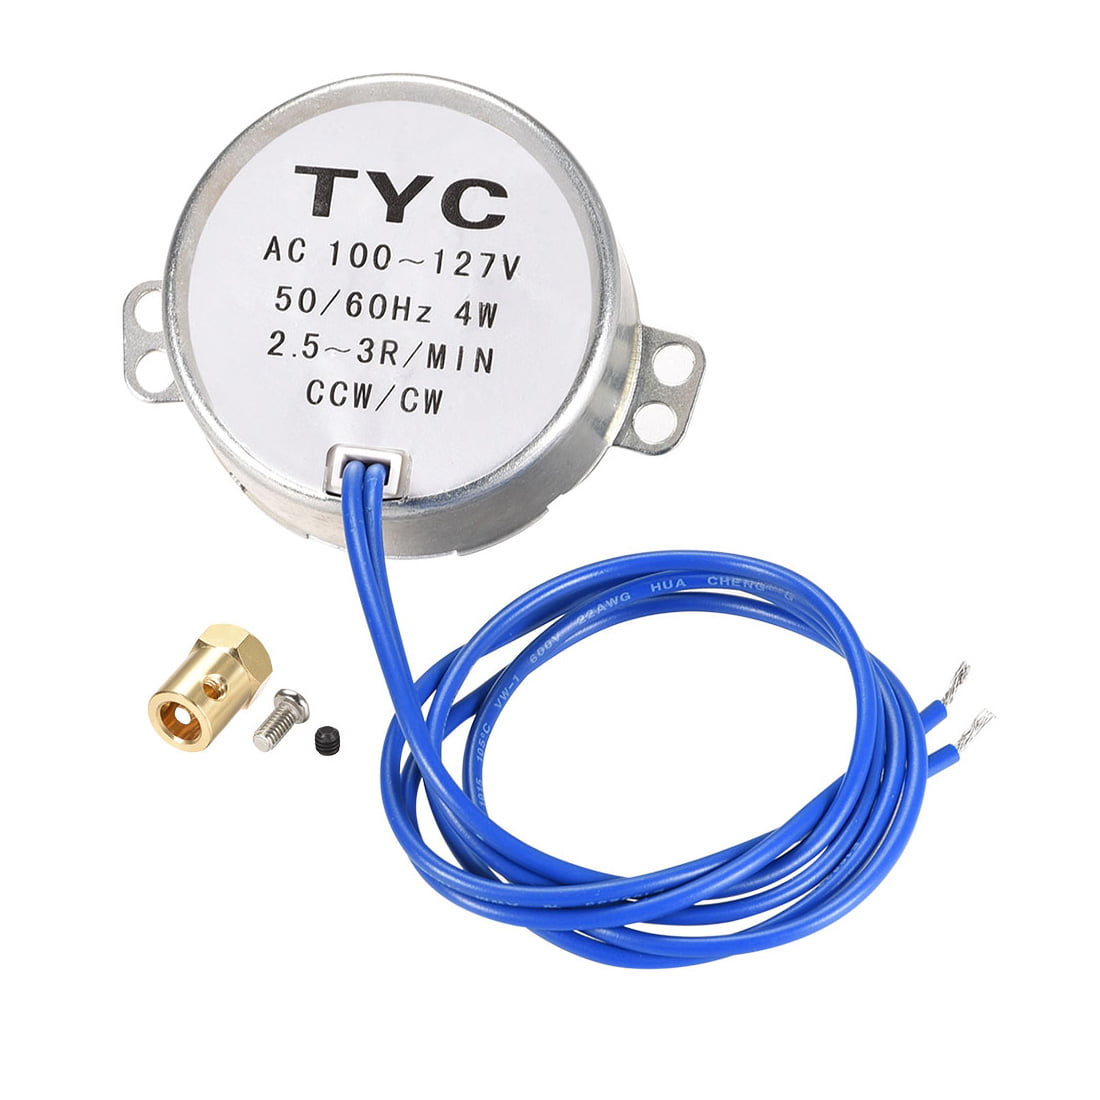 TYC-50 Electric Synchronous Motor 50/60Hz 100-127V 4W CCW/CW AC Motor 2.5-3RPM 